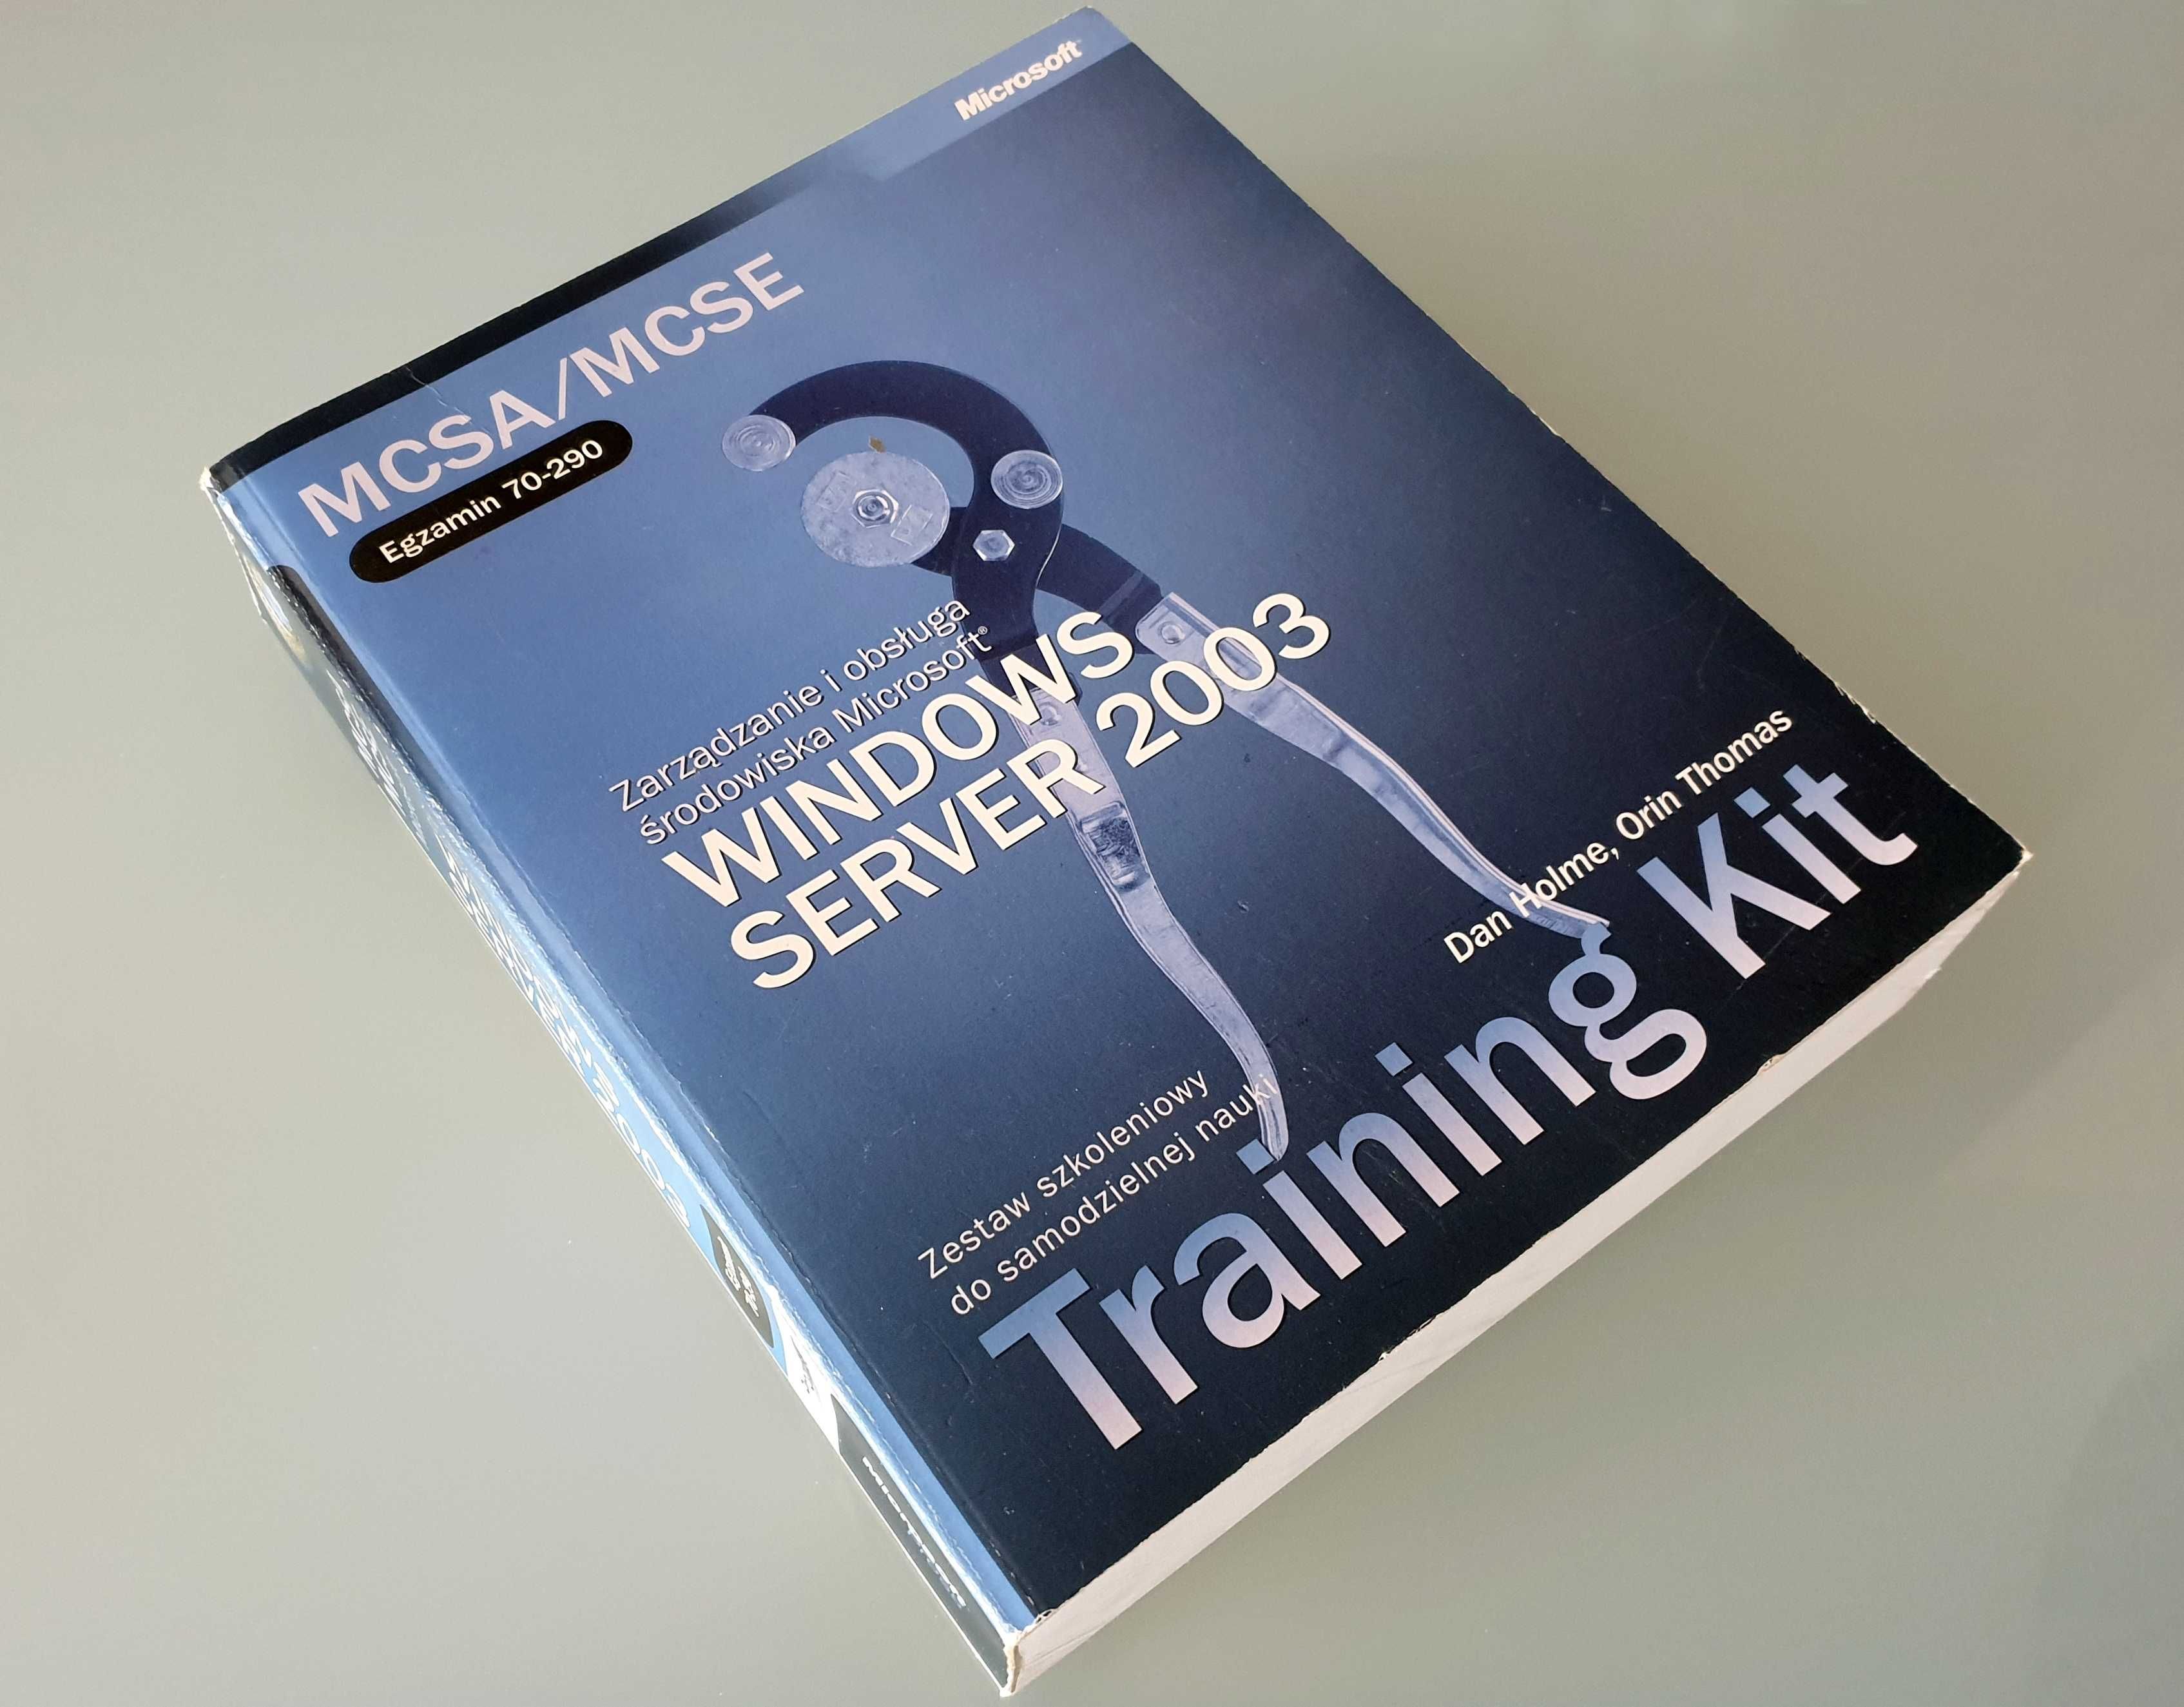 MS Windows Server 2003 - Przewodnik techn, Training Kit, Vademecum